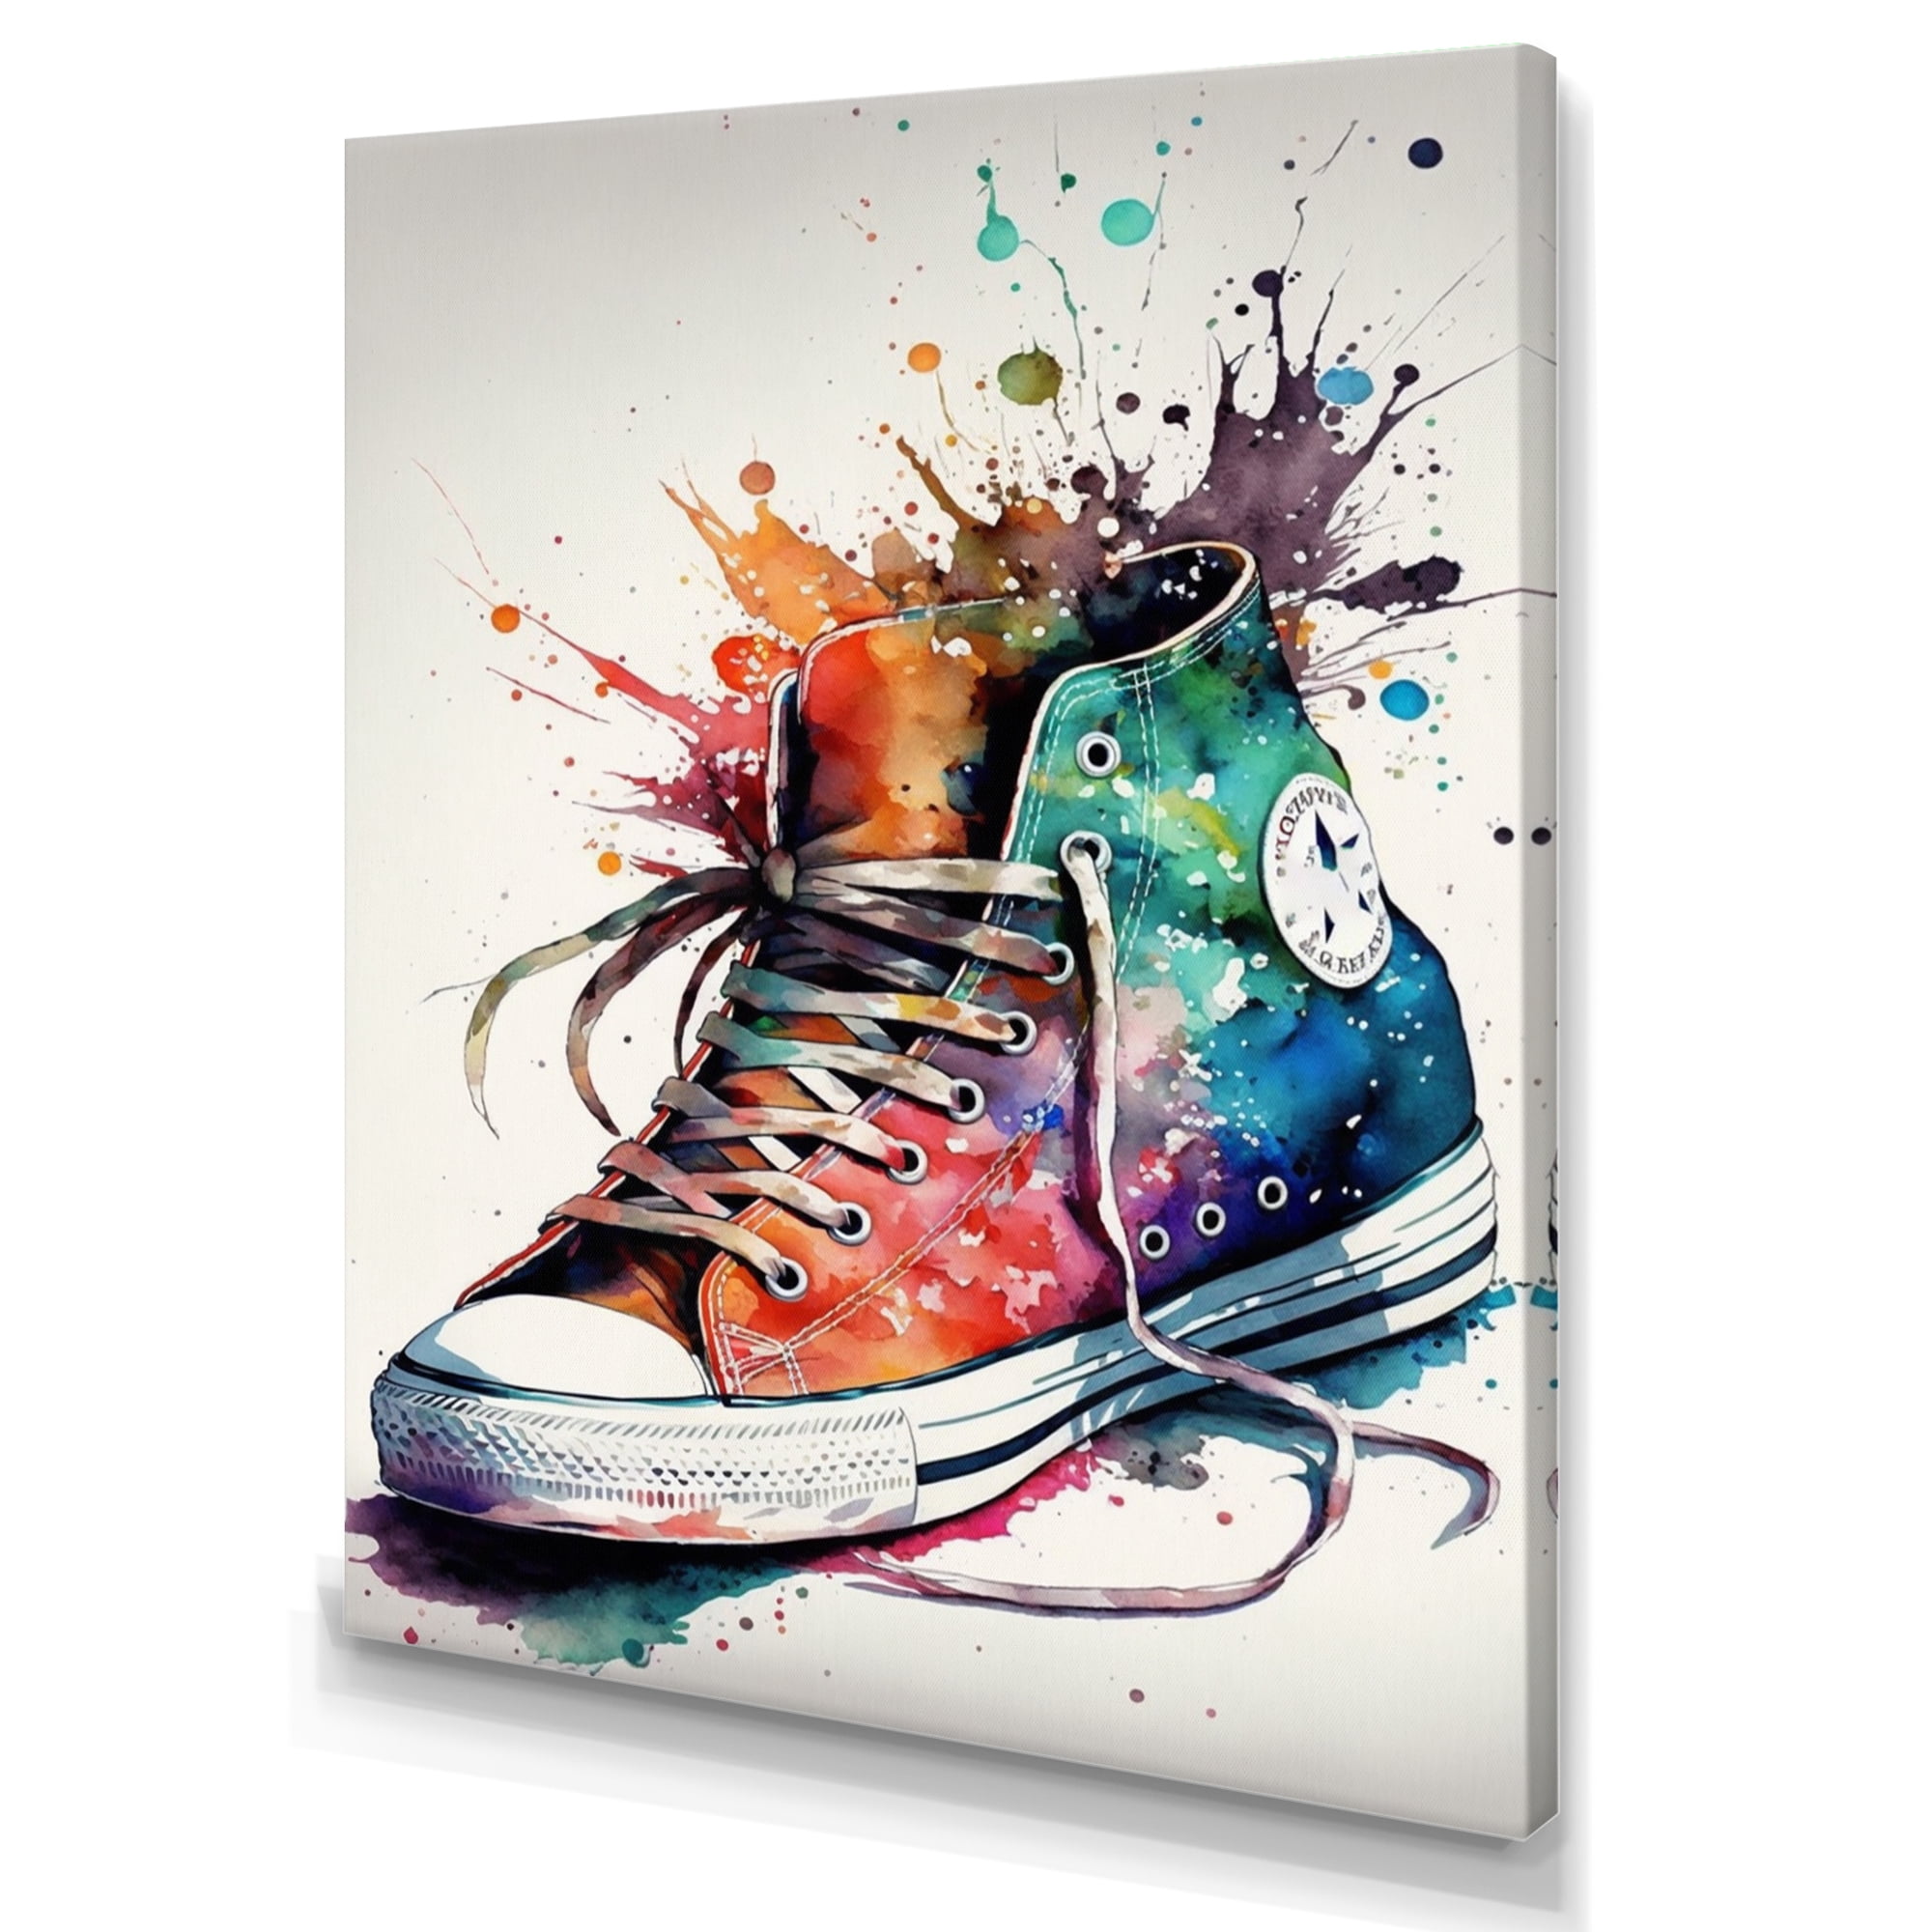 Sneakers Printed Paintings | Painting Canvas Sneakers | Sneaker Canvas Wall  Art - Painting & Calligraphy - Aliexpress